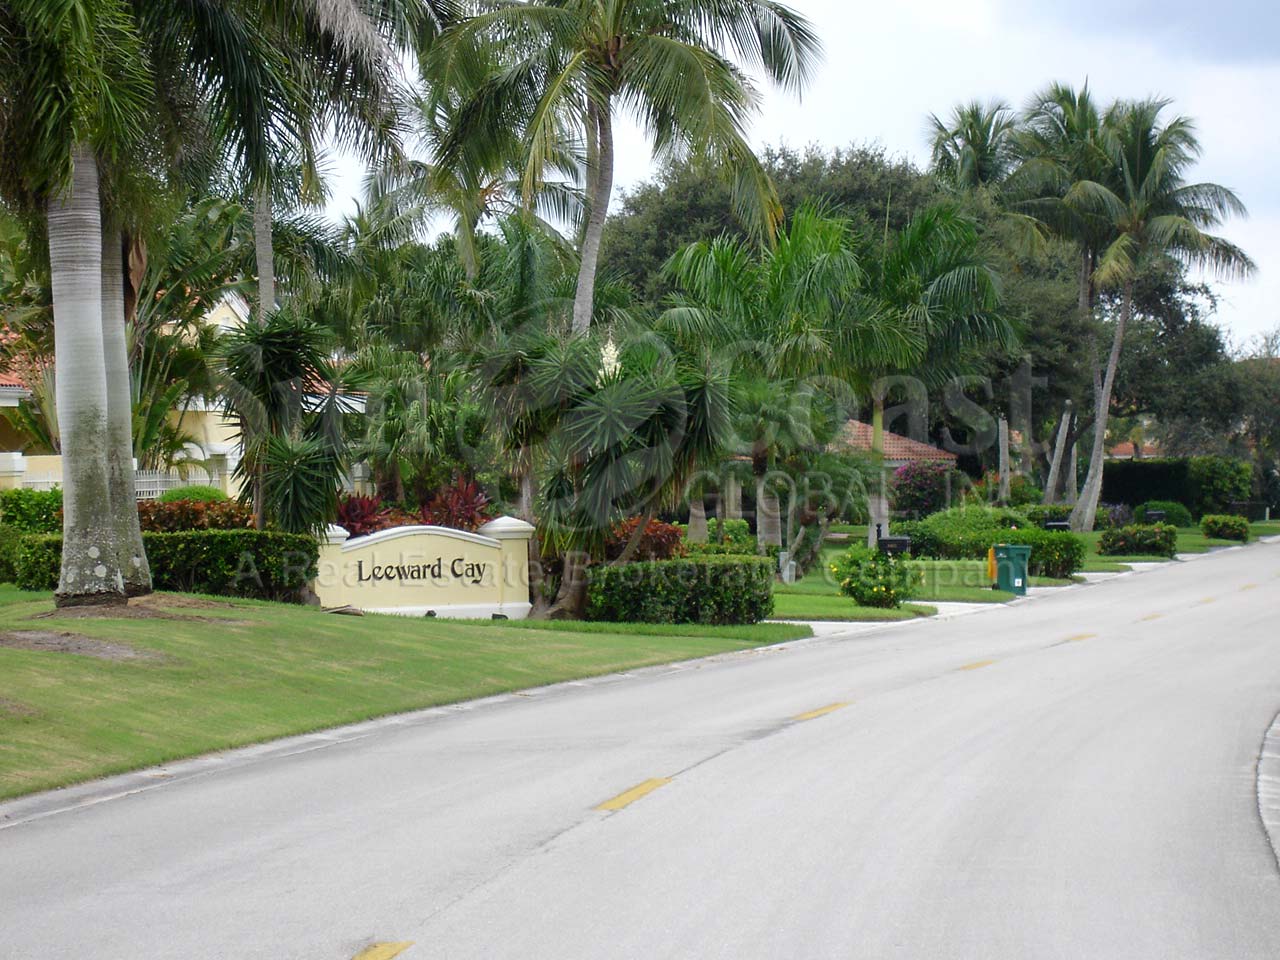 Leeward Cay Entrance